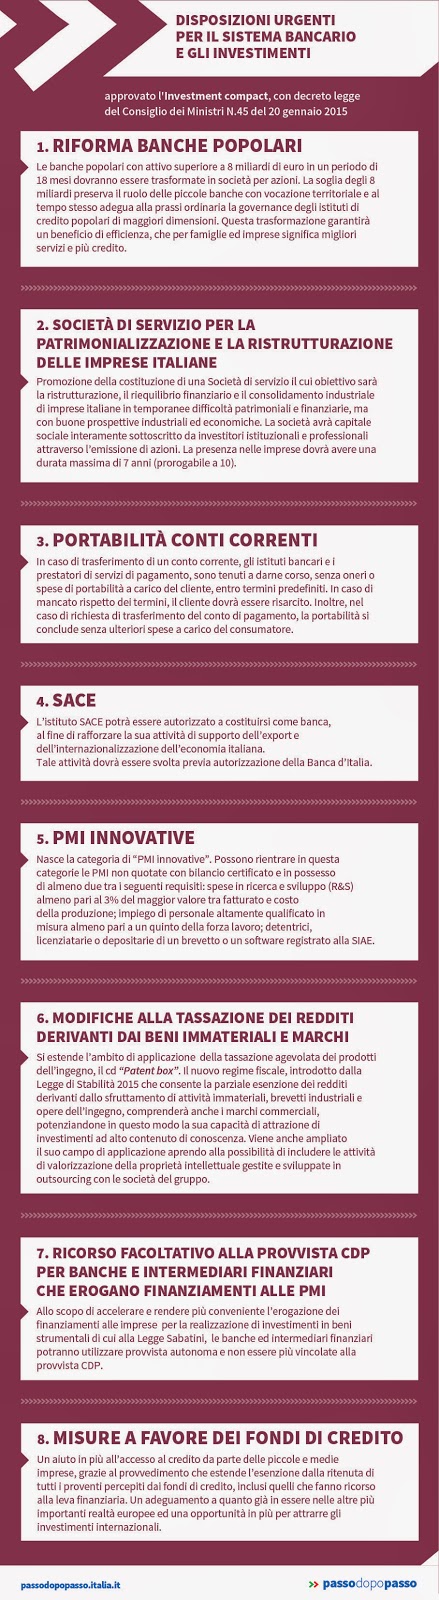 PMI innovative: infografica Investment Compact - Fonte passodopopasso.italia.it